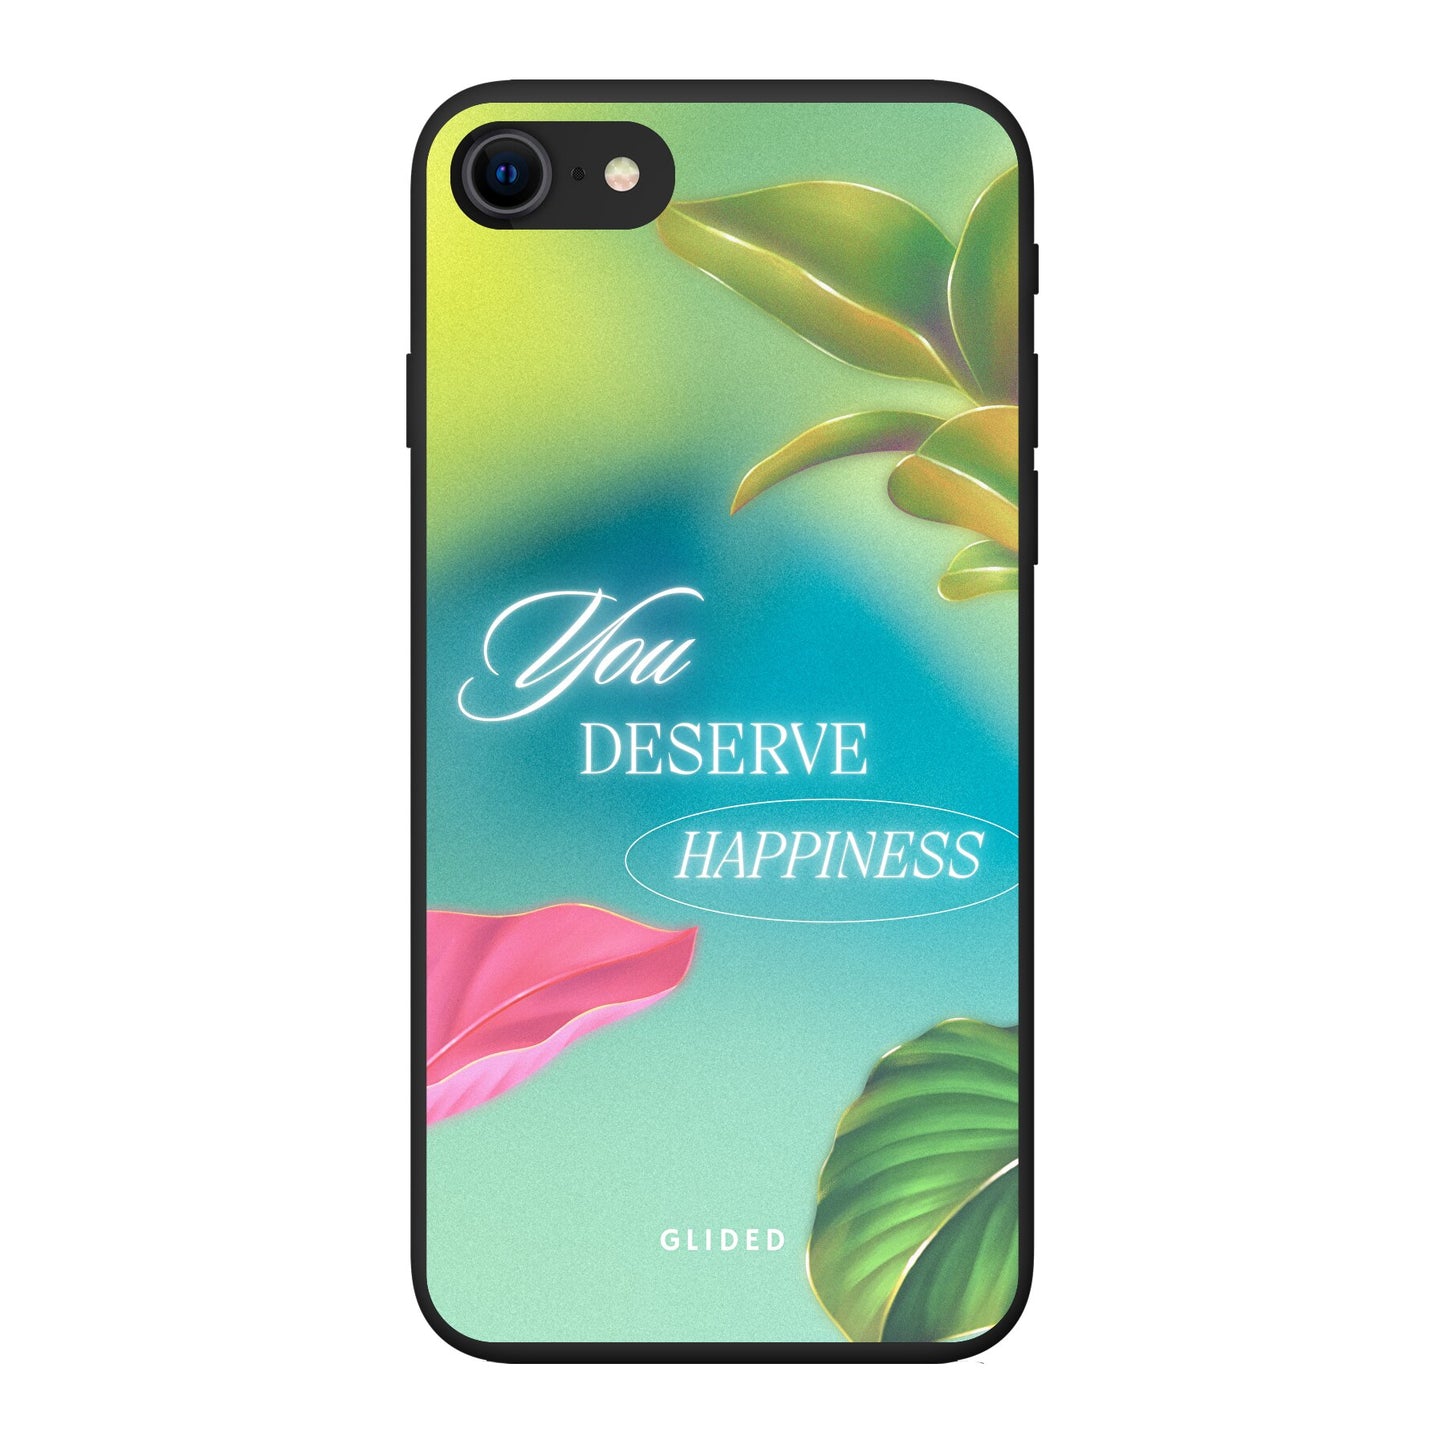 Happiness - iPhone 7 - Biologisch Abbaubar